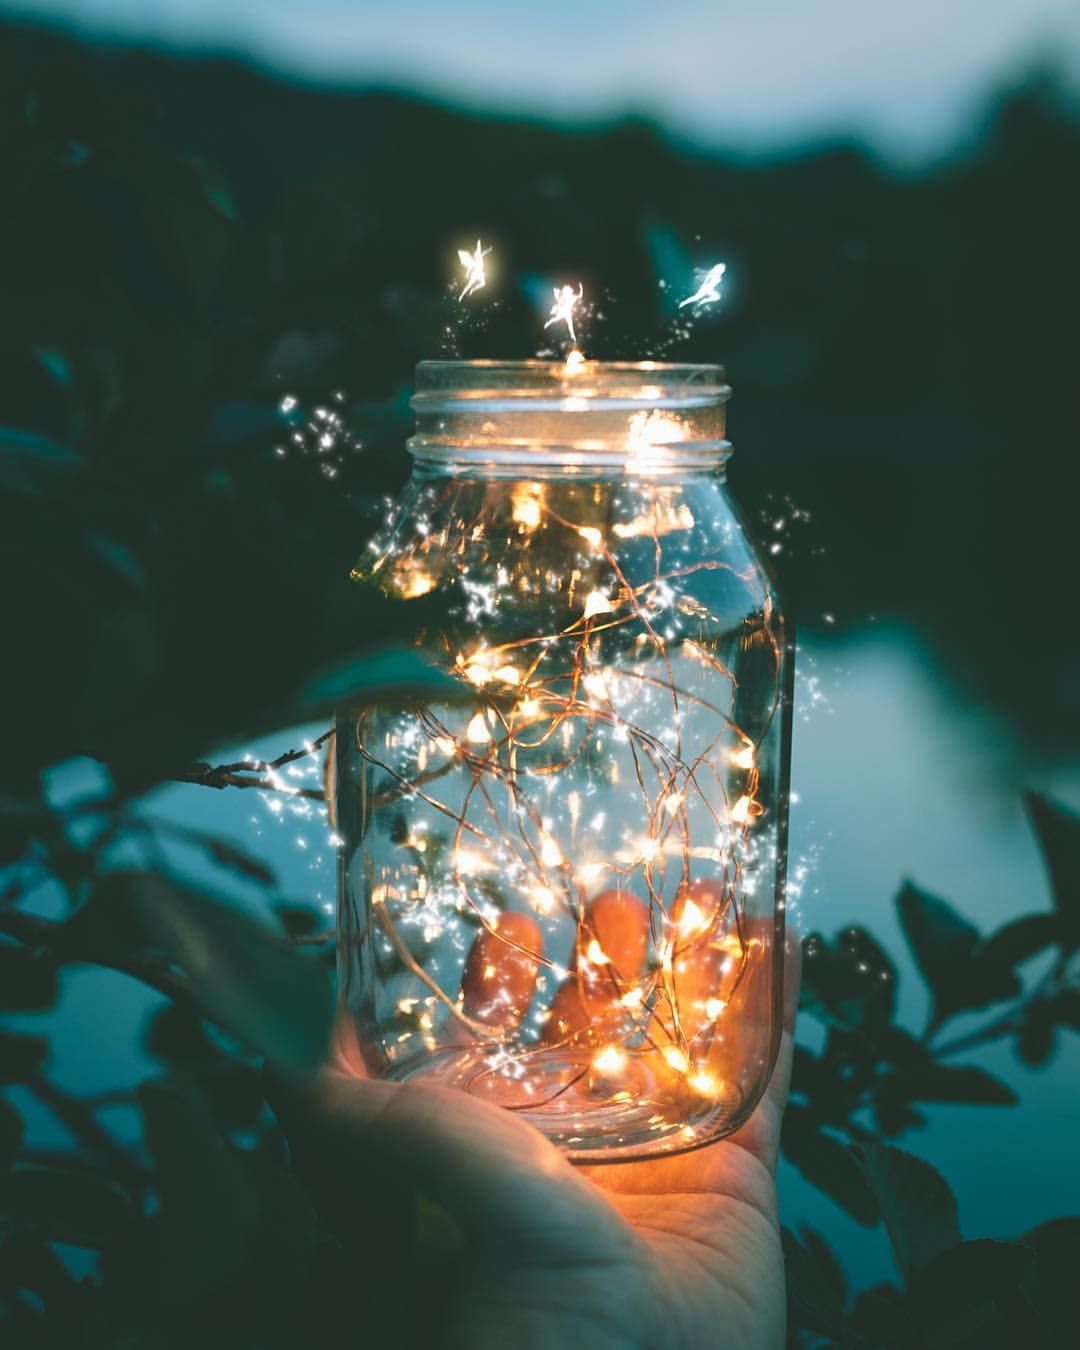 Hand holding a jar with lights inside - Fairy lights